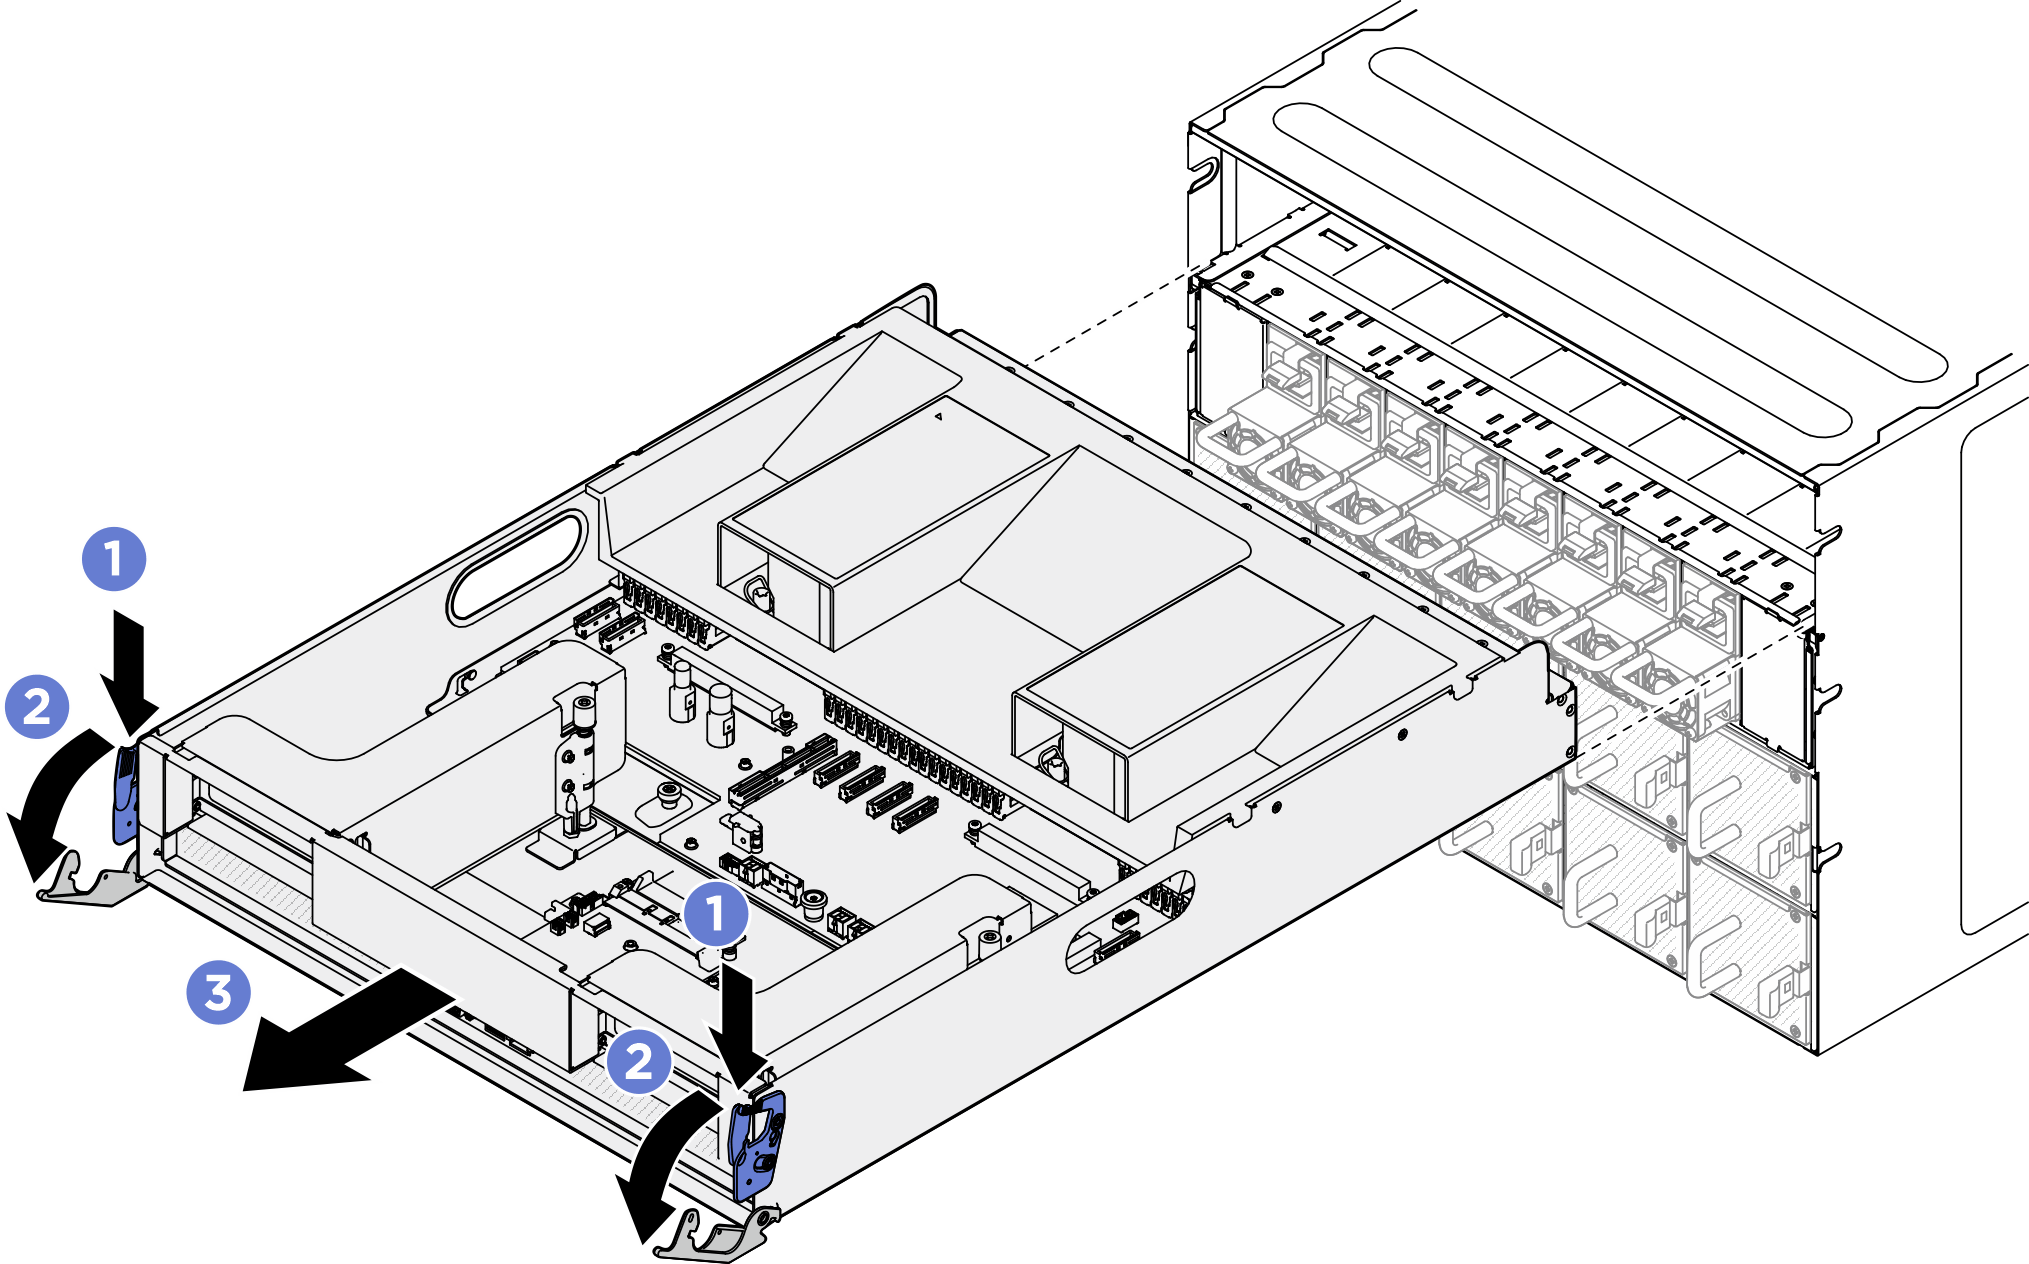 2U-Compute-Shuttle removal